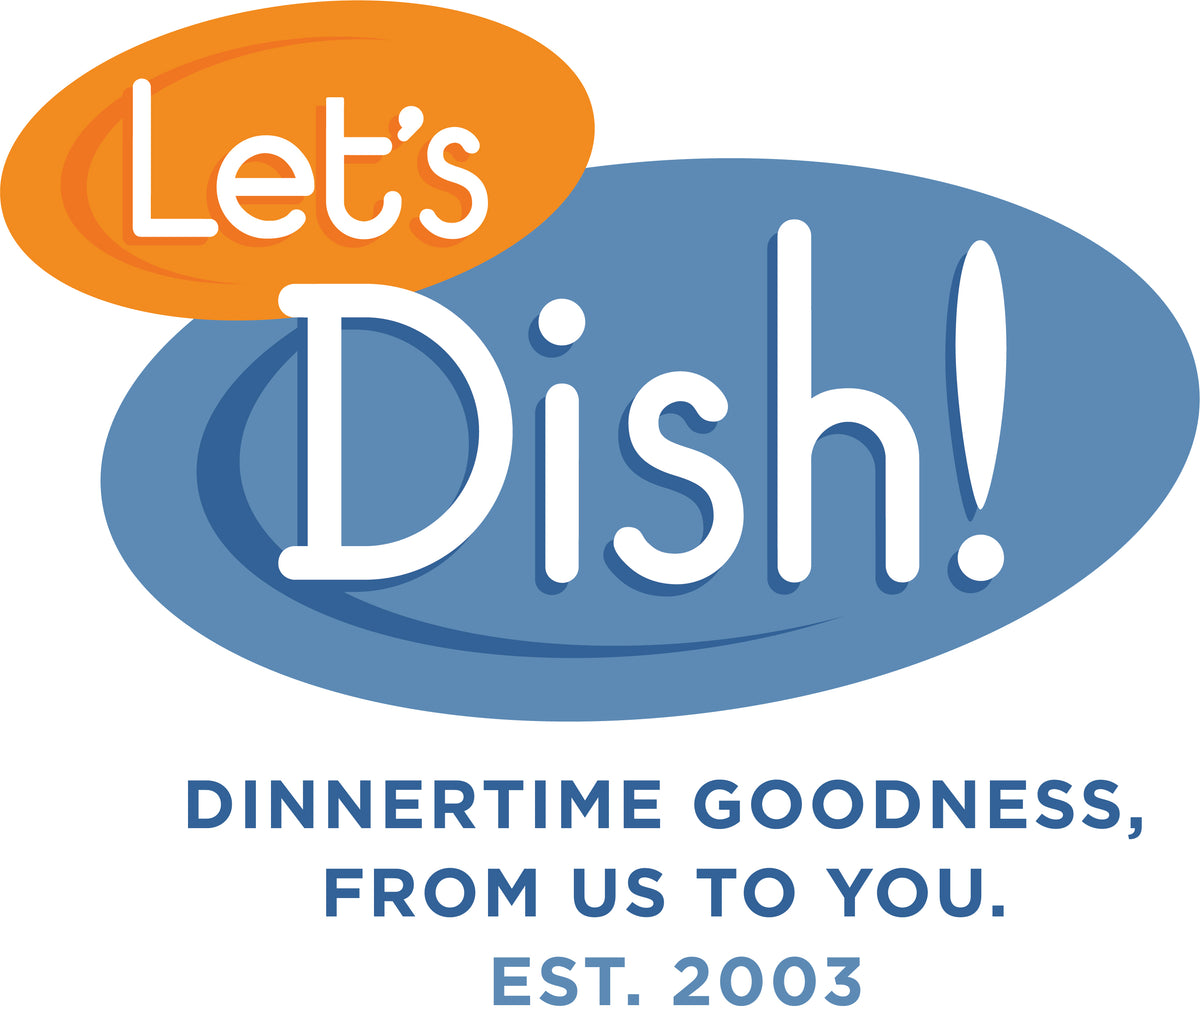 Dishes logo. Crockery logo. It s a dish